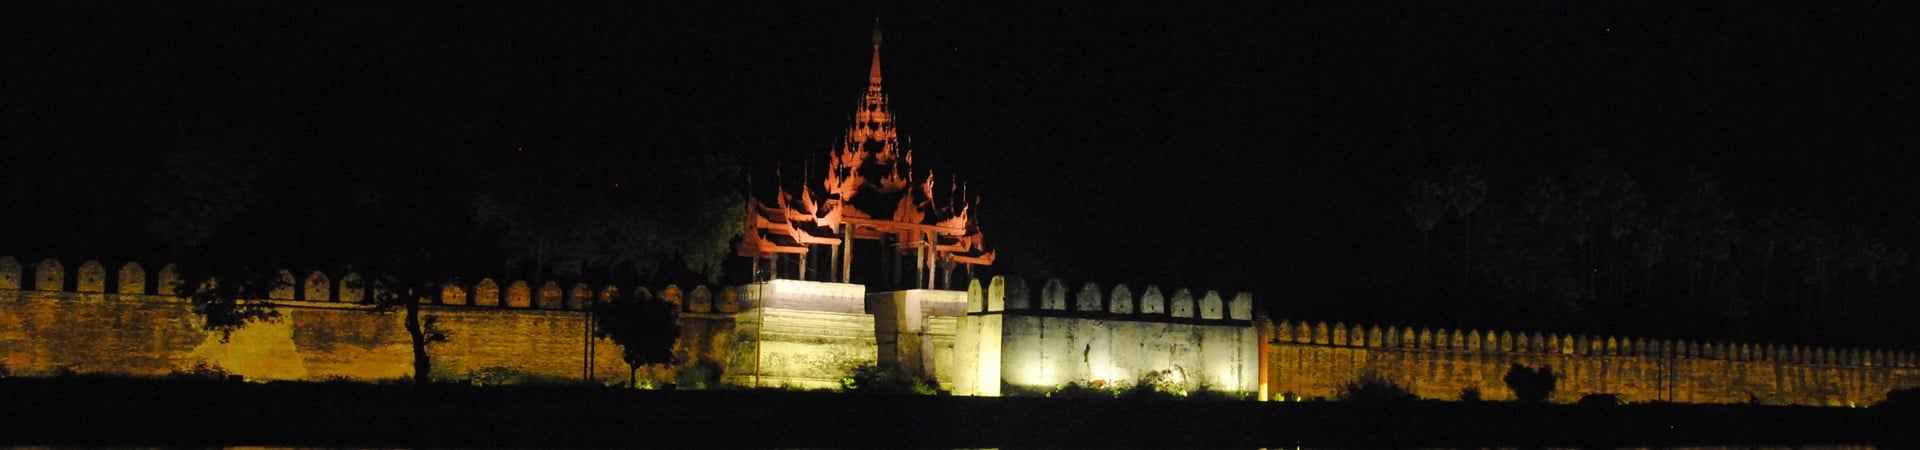 Image of Mandalay nights by motorbike